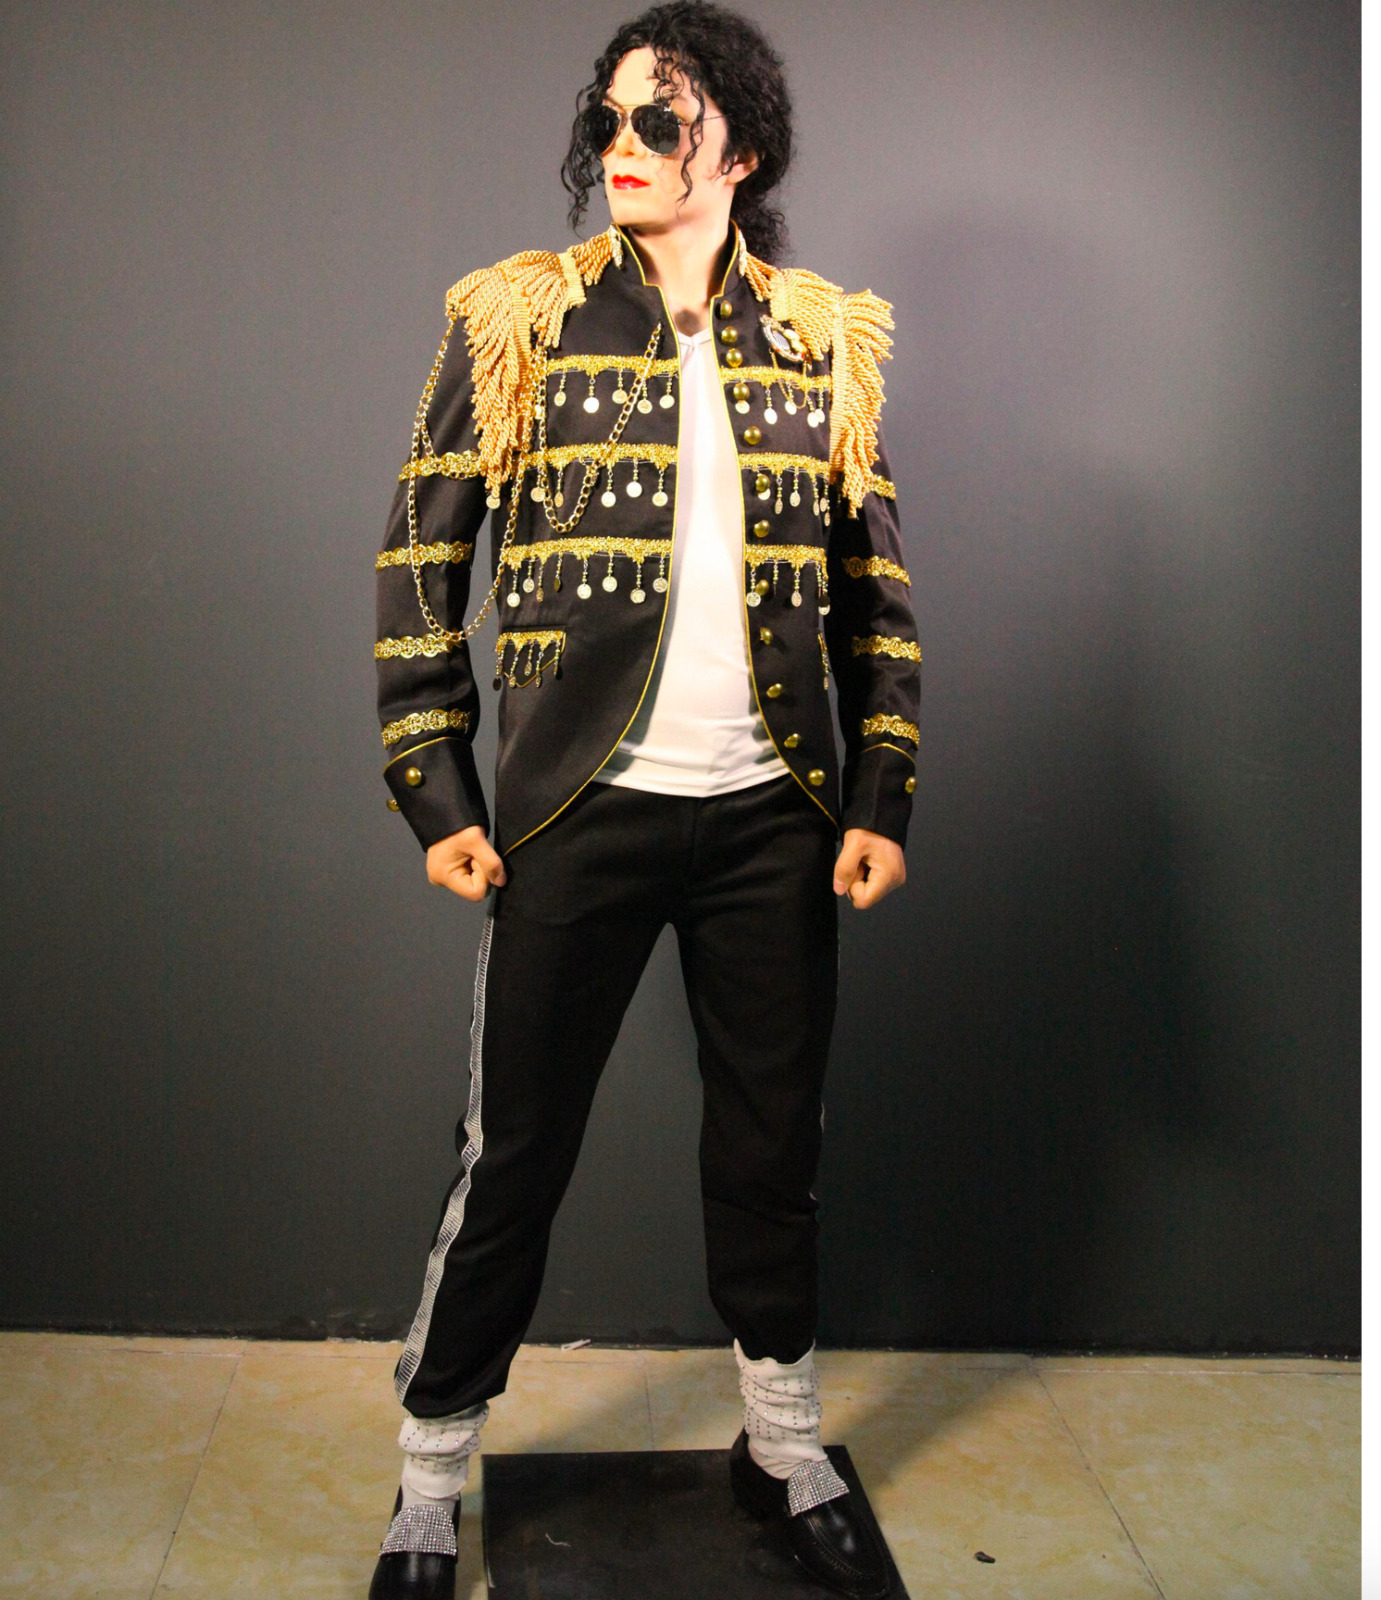 Life Size Michael Jackson Dance Posing Statue Prop Display Style Sing Music 1:1